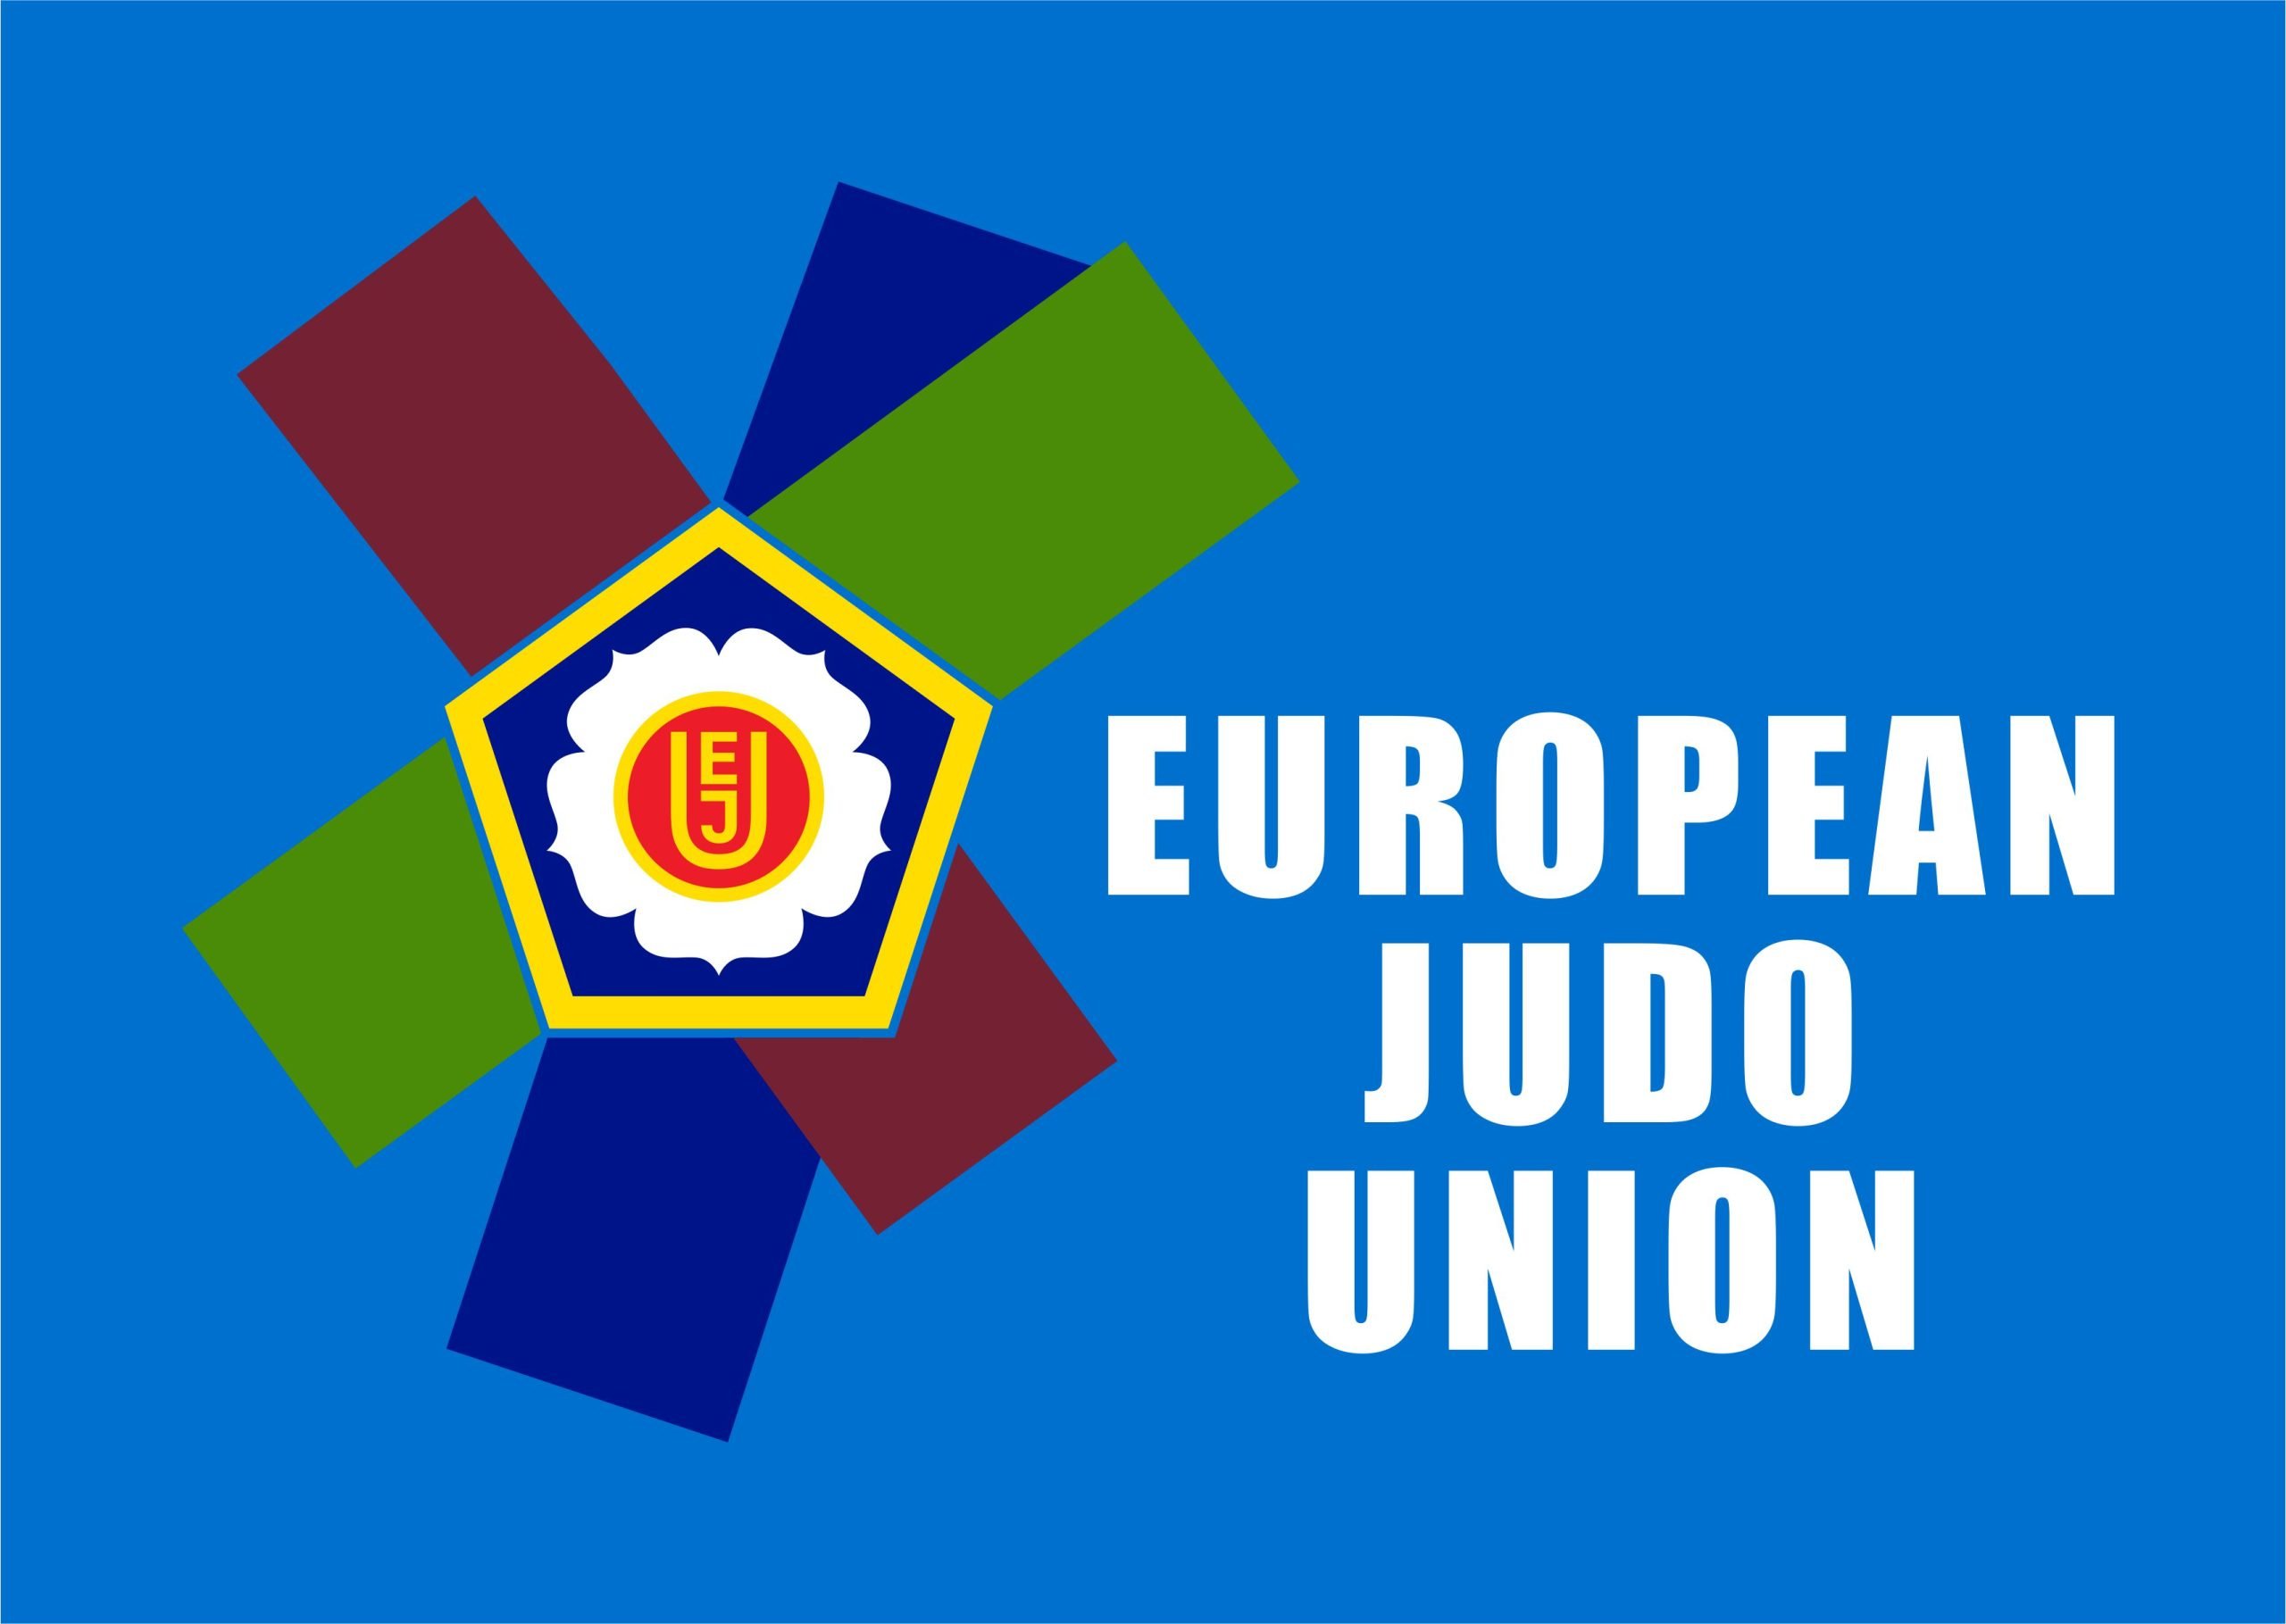 CURRENT EUROPEAN JUDO TOUR SPONSORS PUT ON HOLD